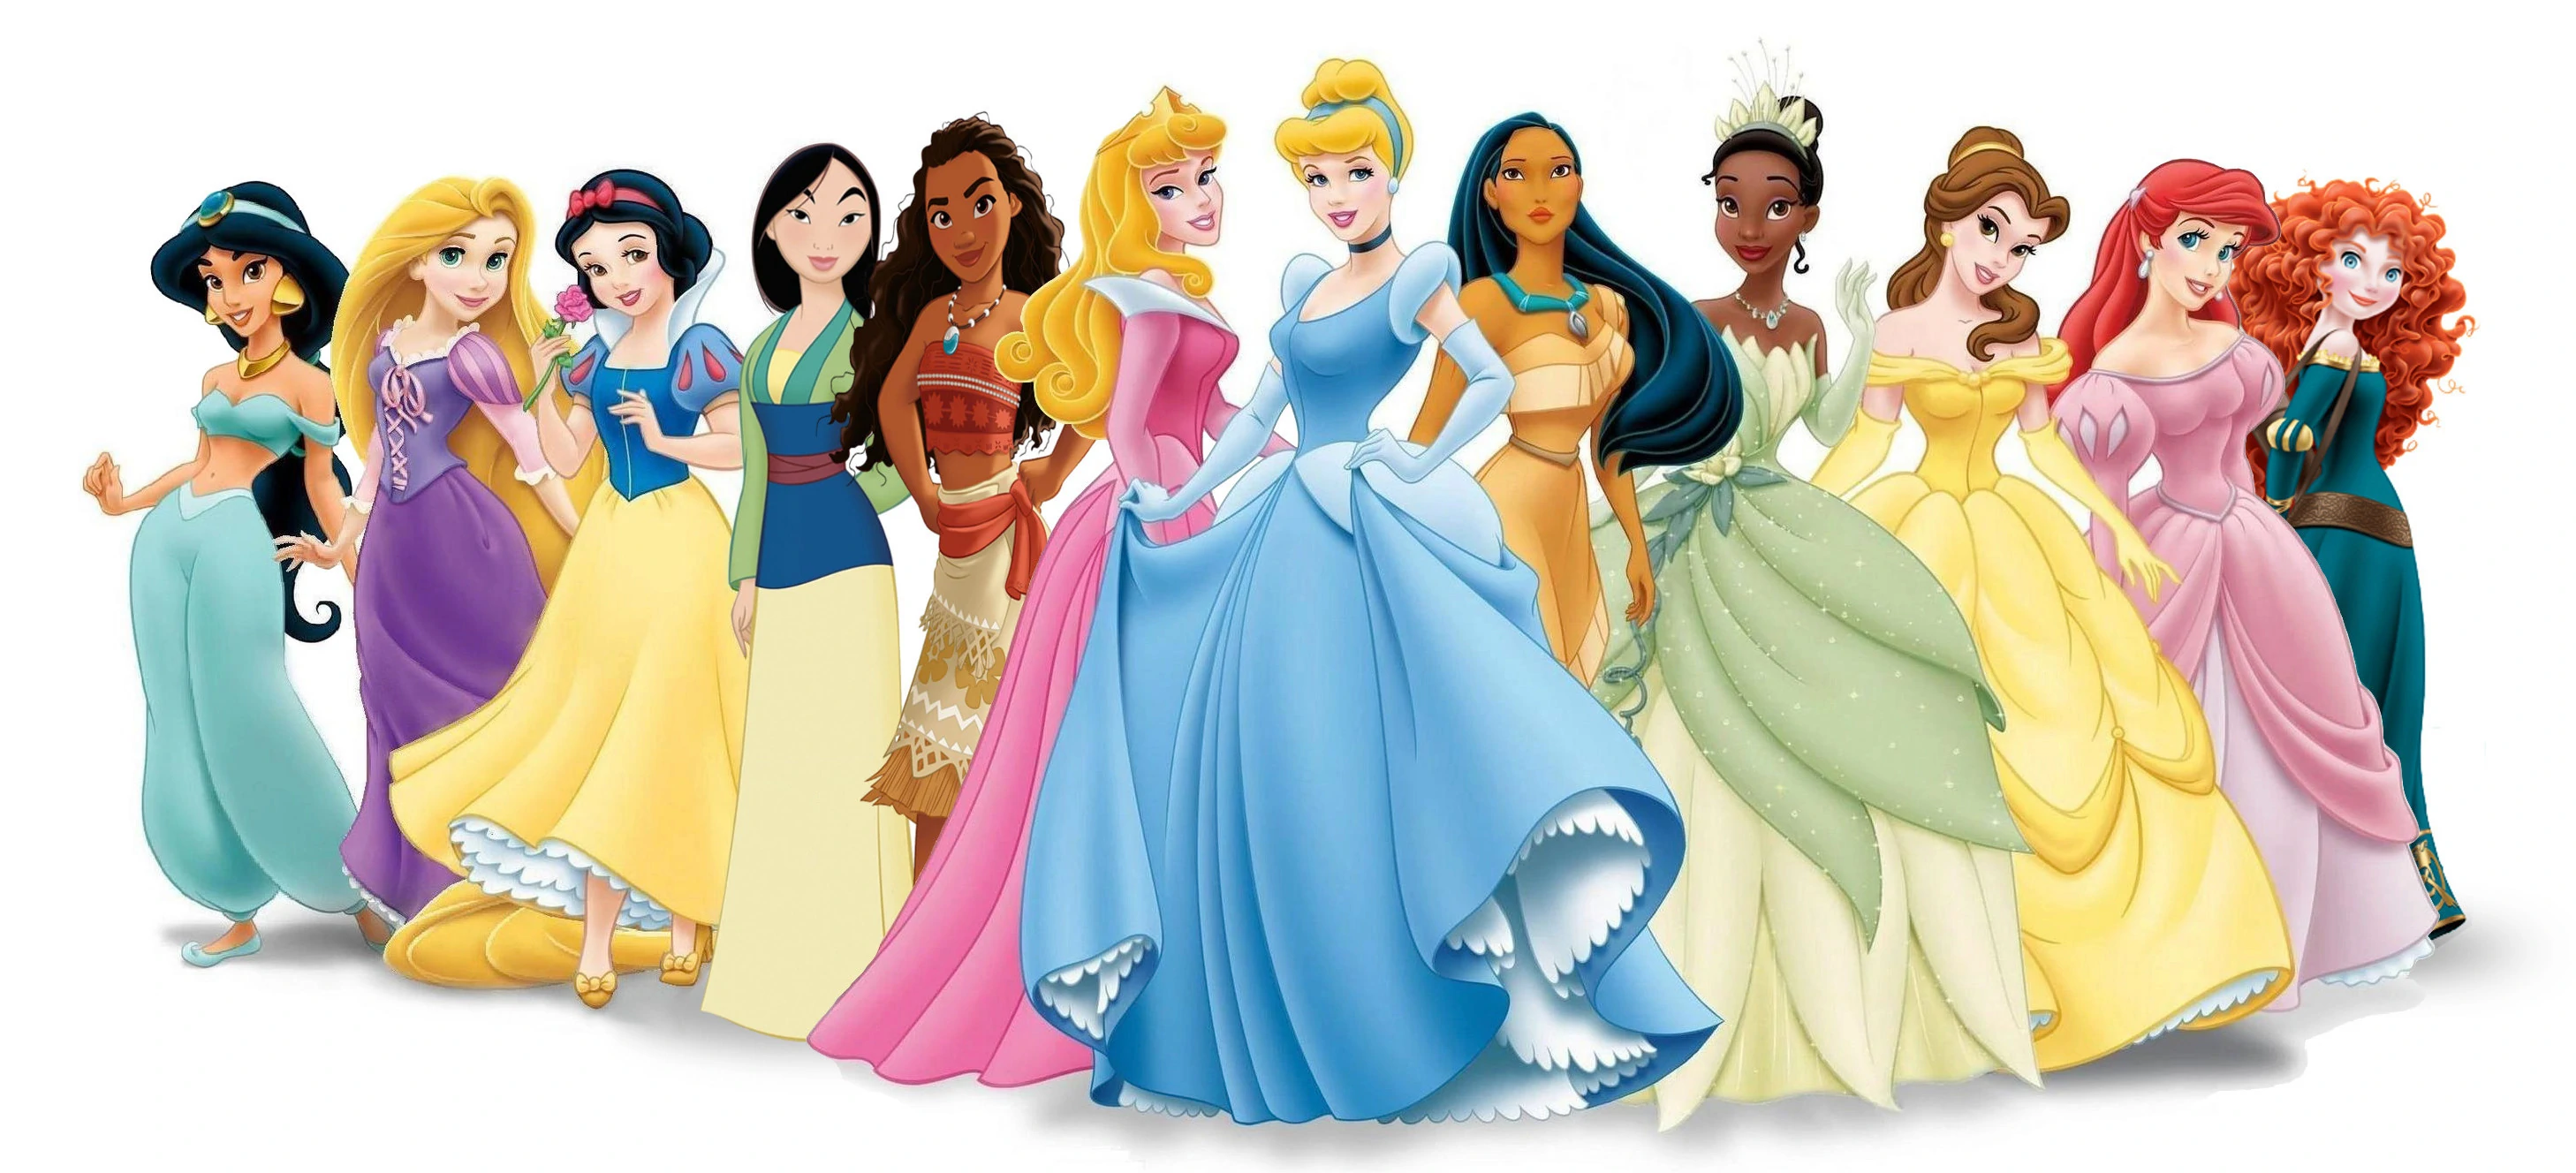 Who is the worst Disney Princess?